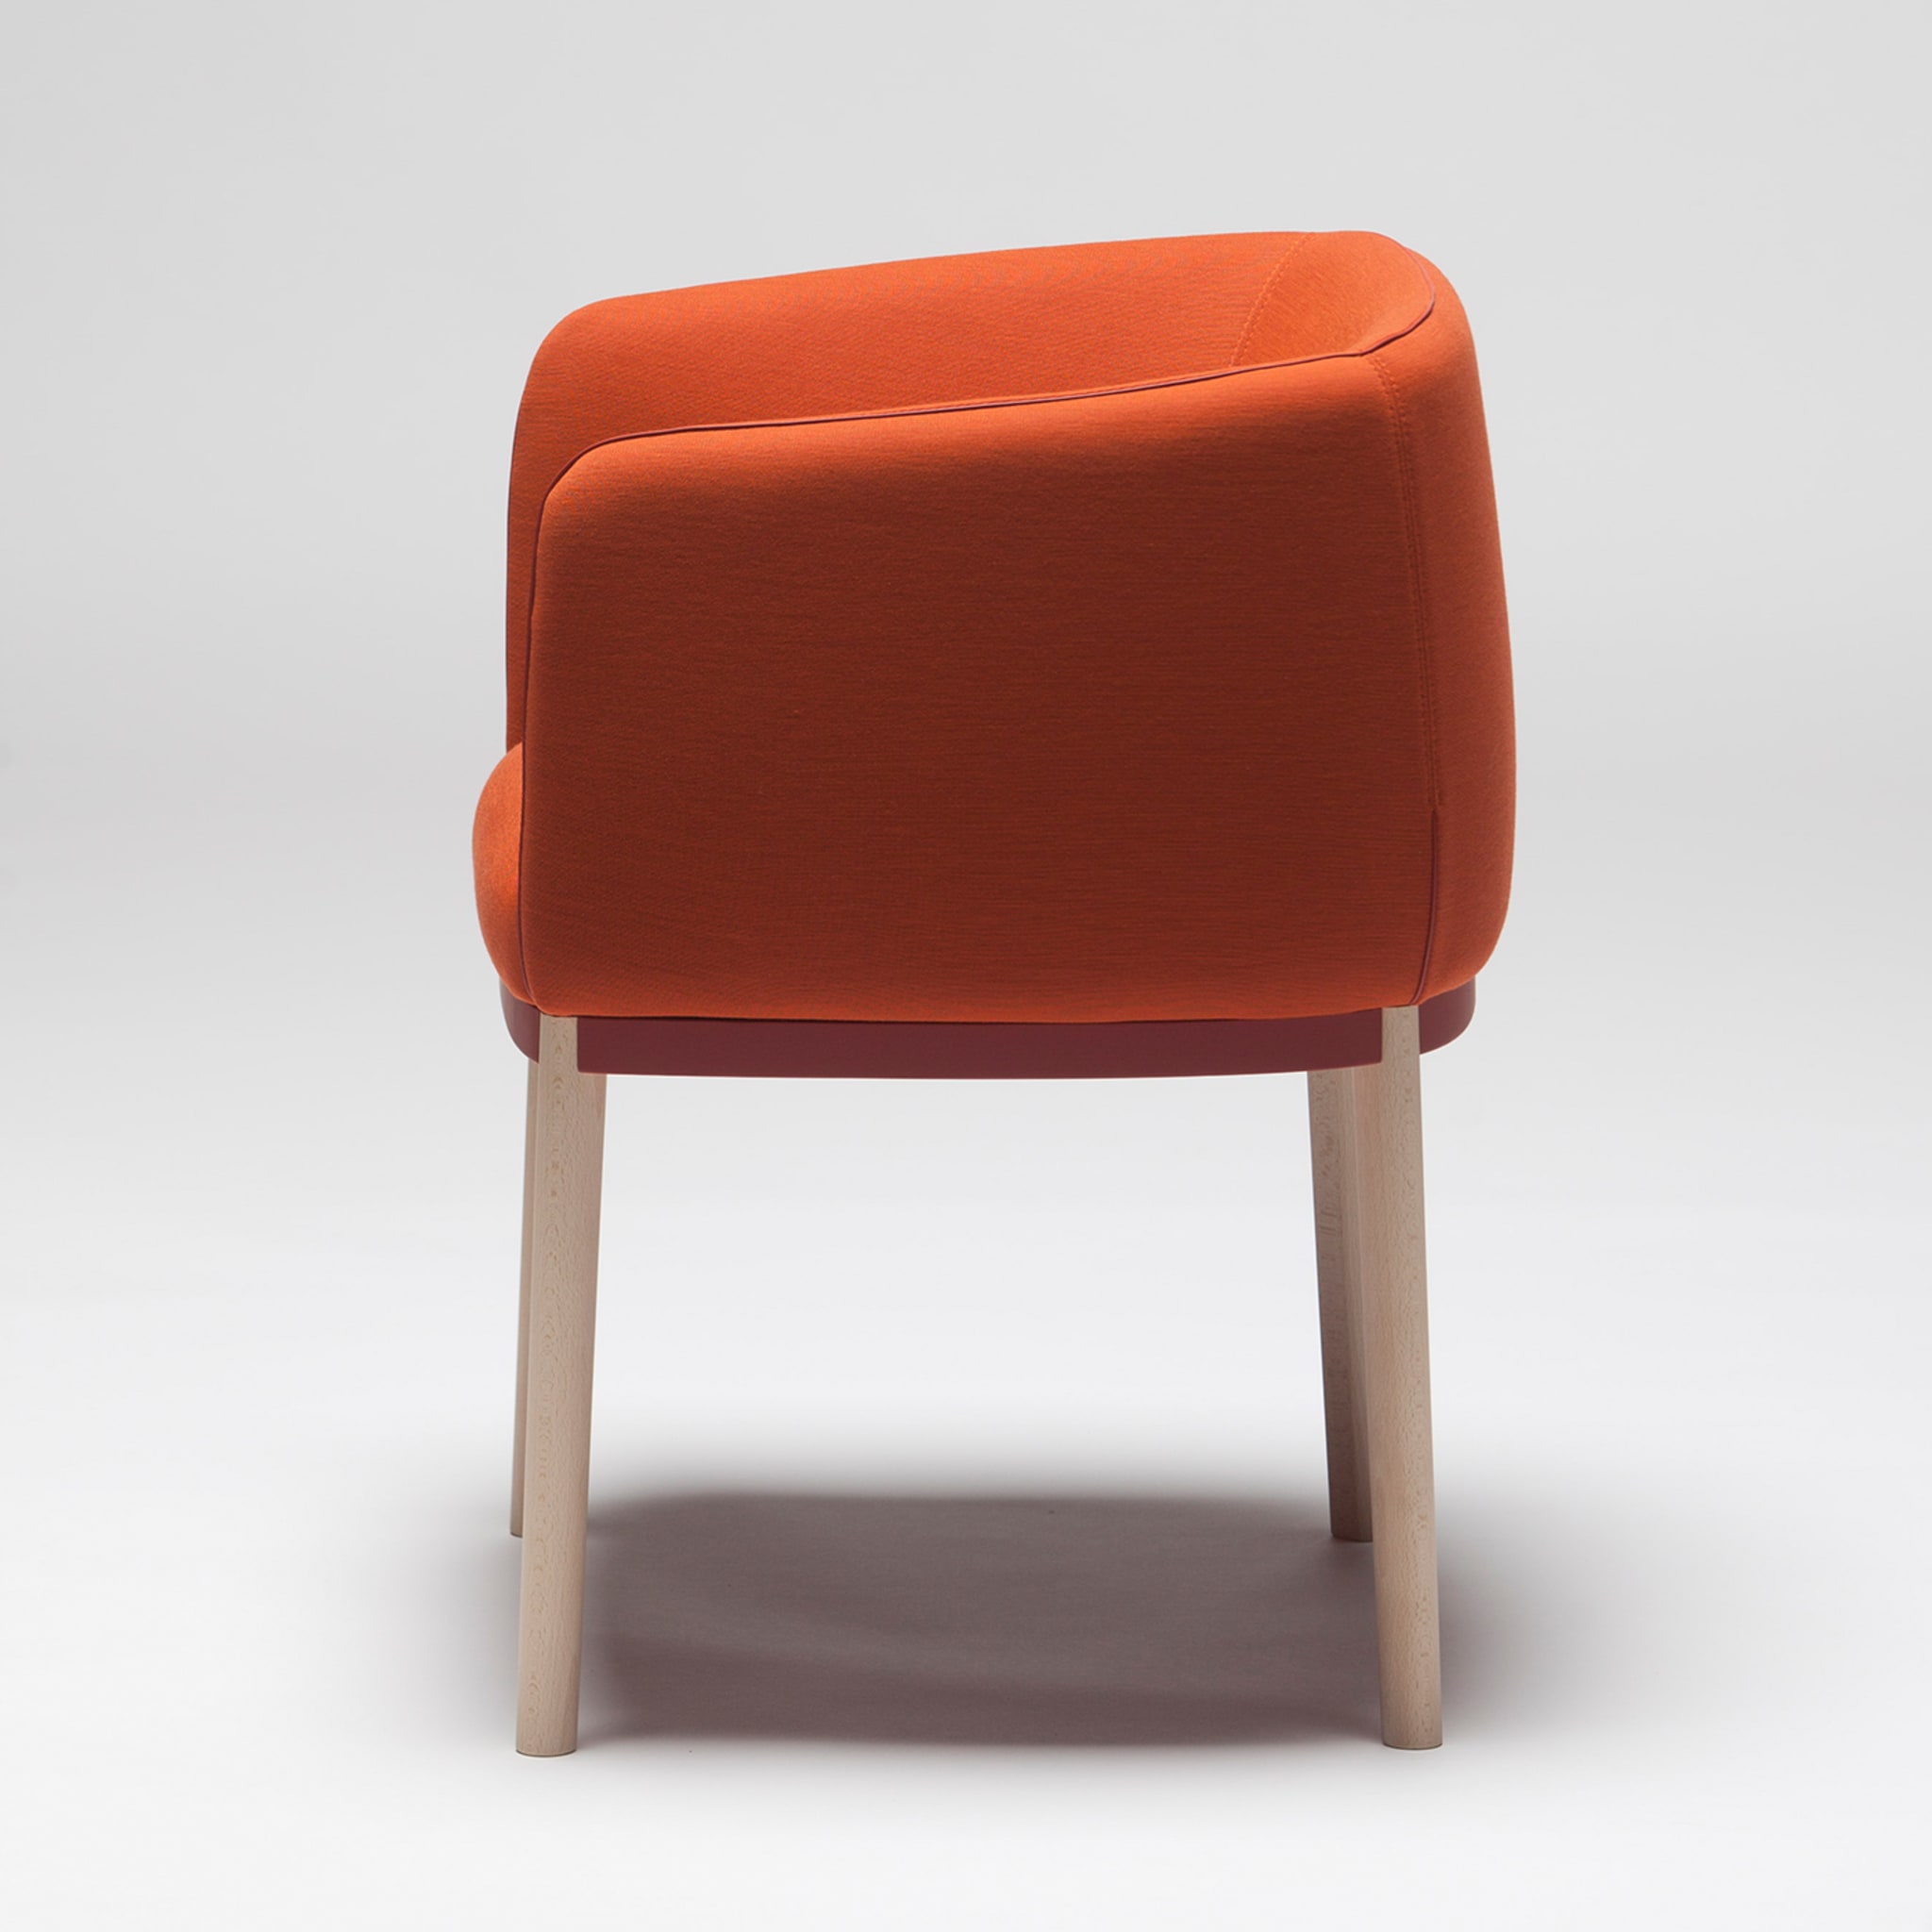 Cape 809 Orange Chair by Debiasi Sandri - Vue alternative 1